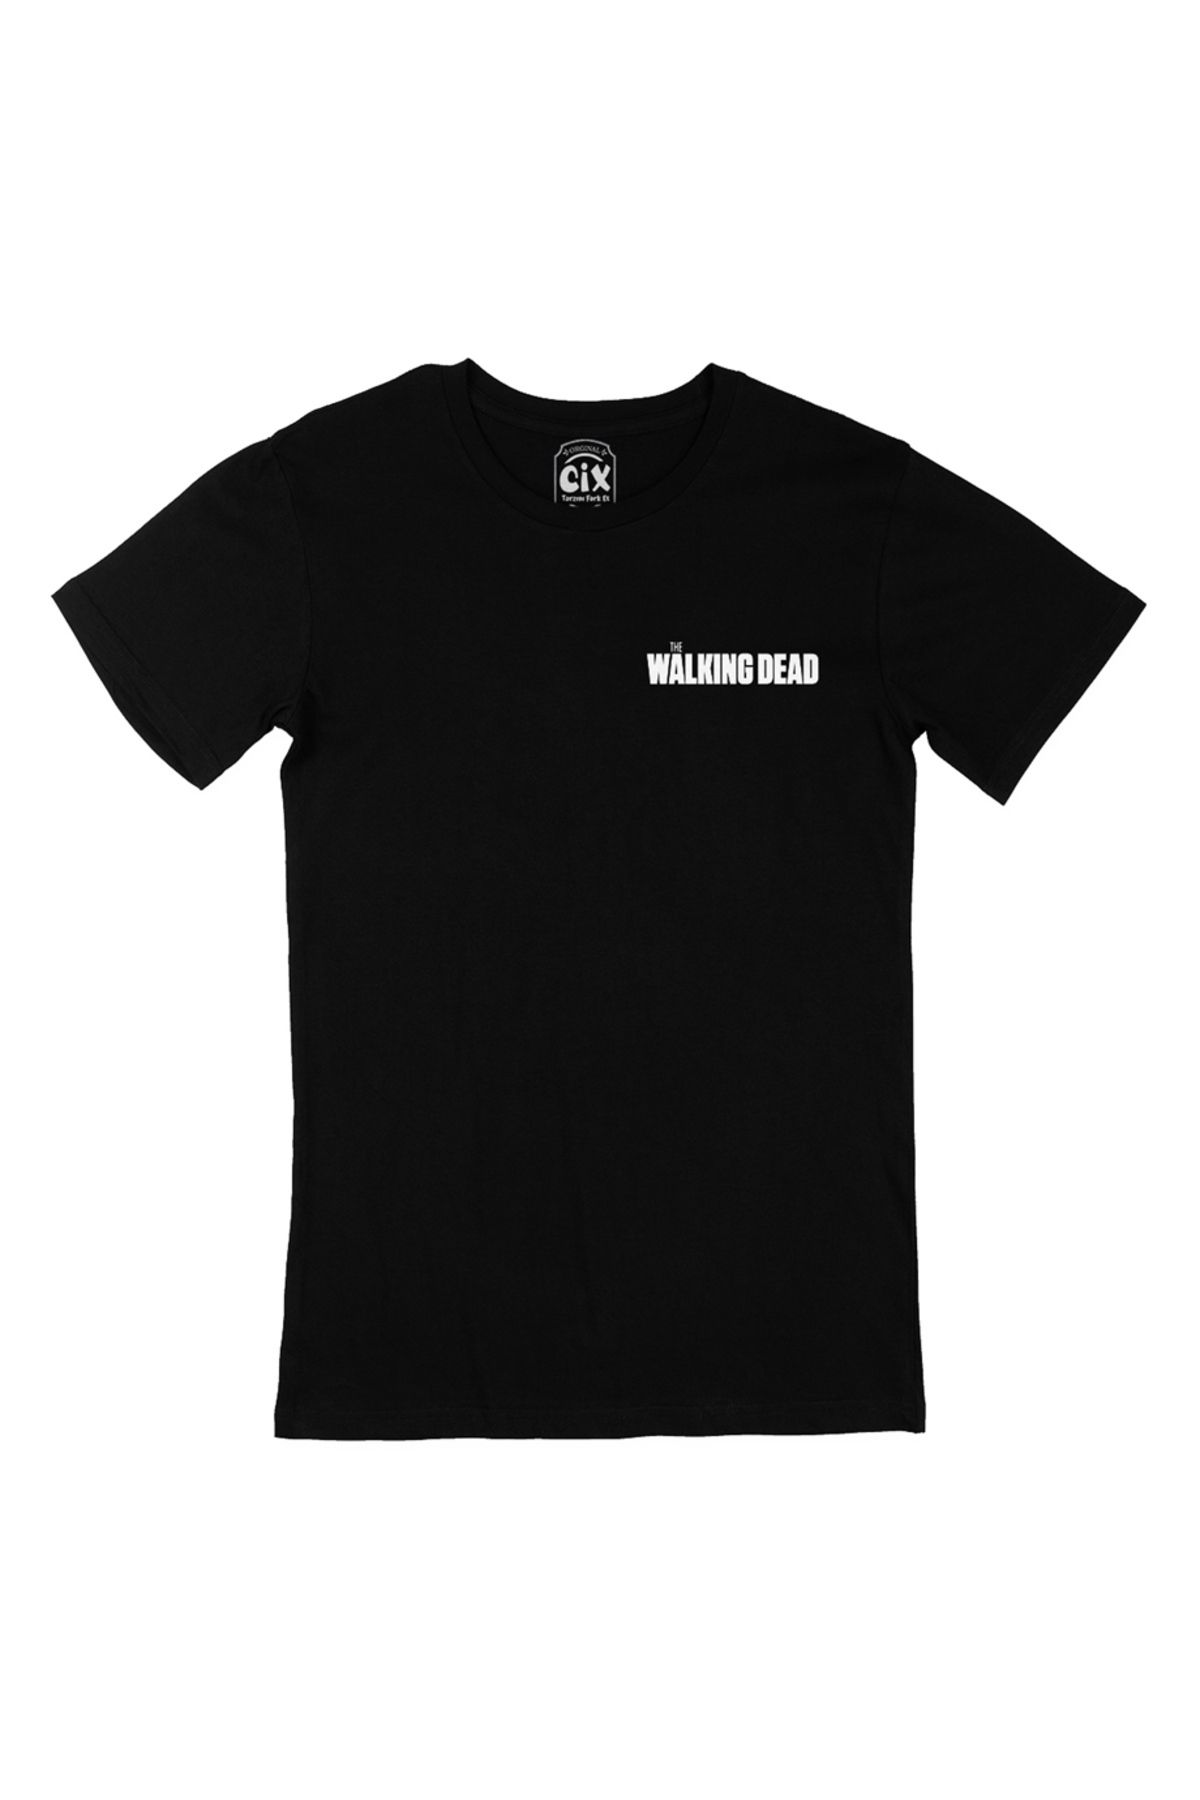 Cix The Walking Dead Cep Logo Tasarımlı Siyah Tişört